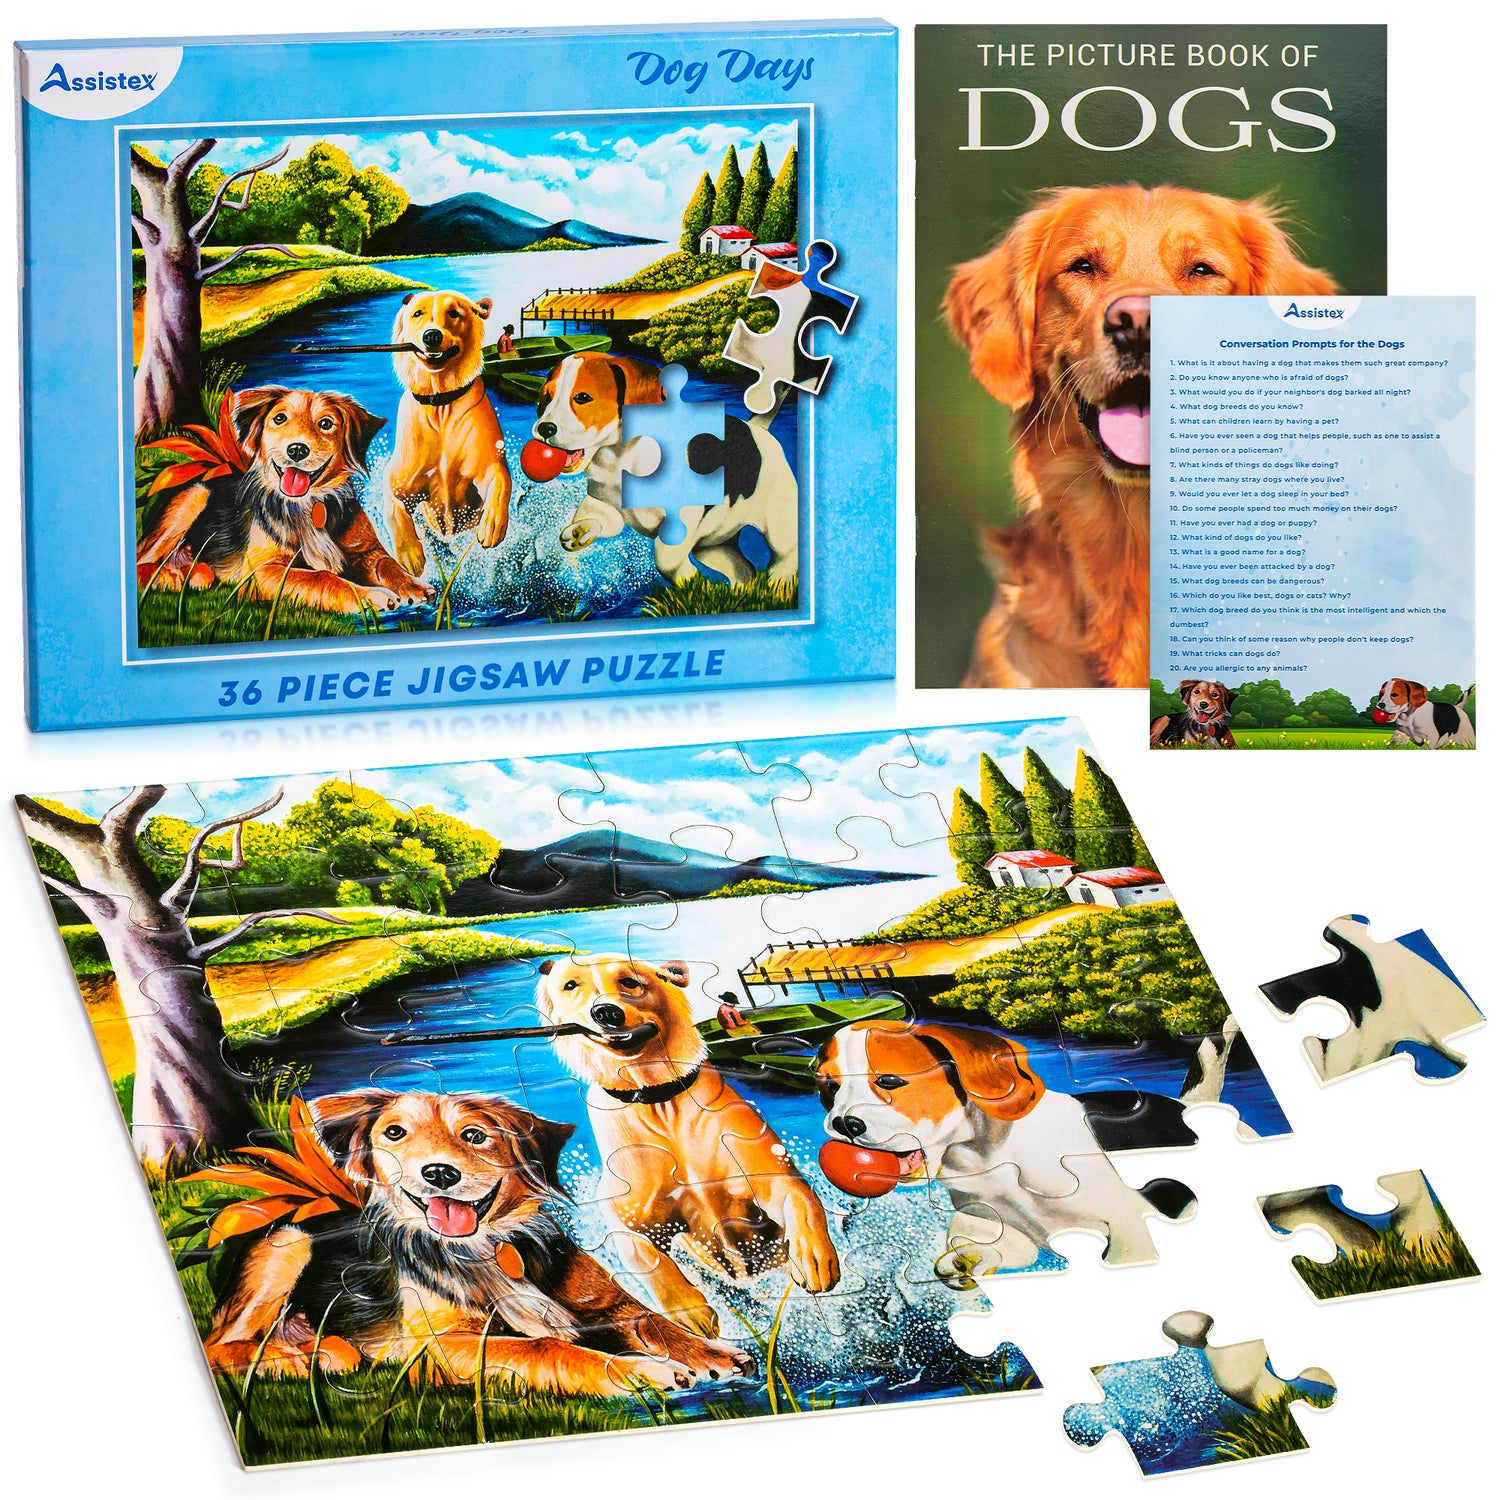 Puzzle Dog Breeds, 500 pieces